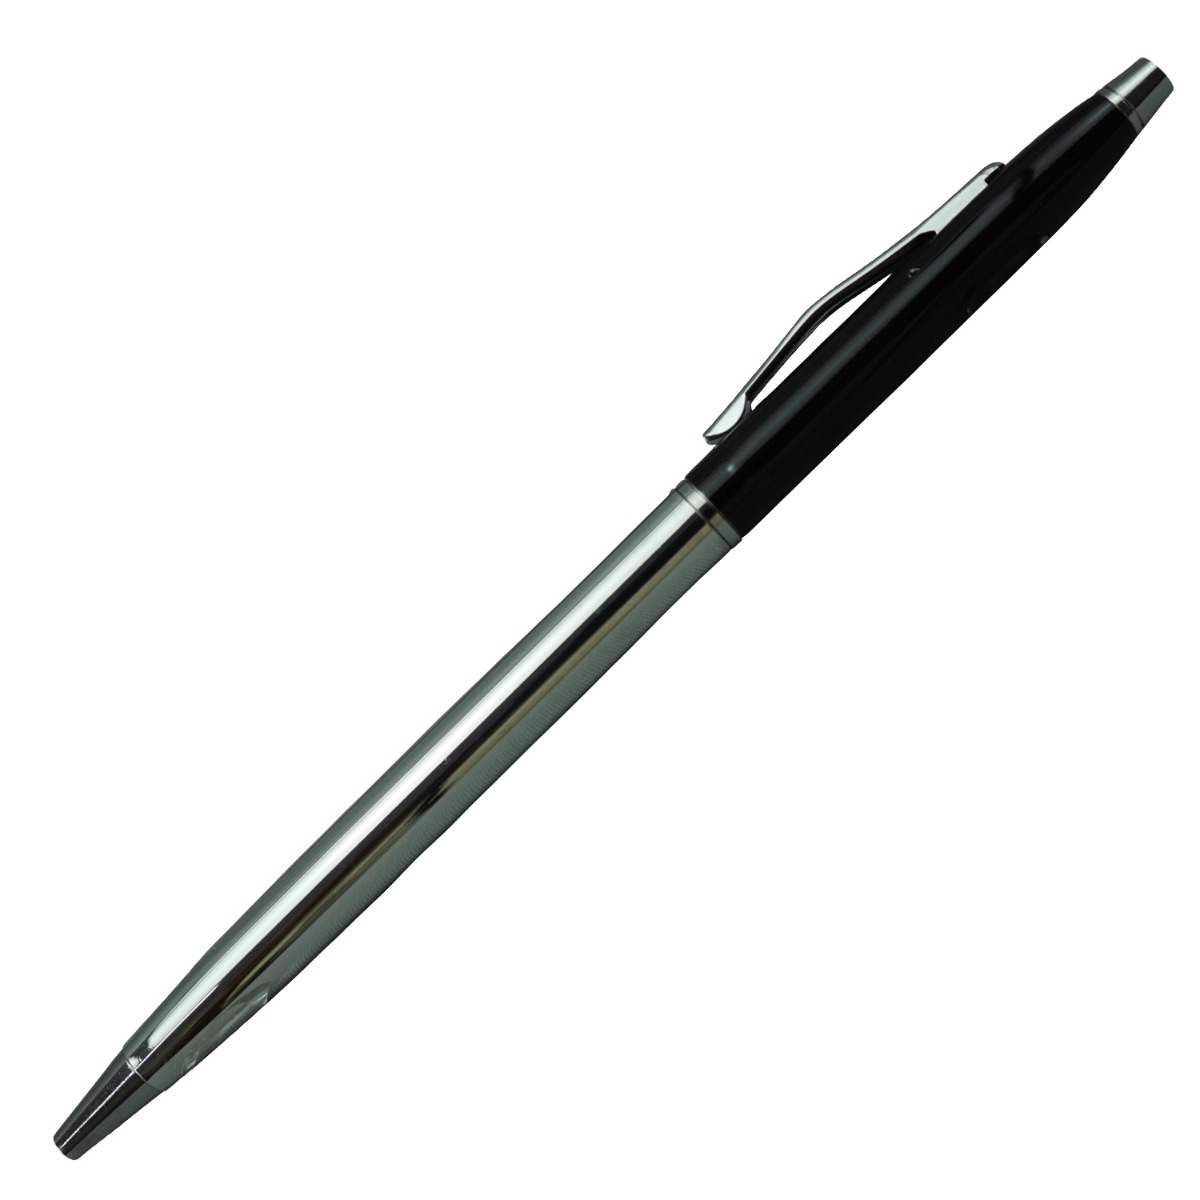 Penhouse Model:16148 Slim Type Silver With Black  Color  Twist Type Body  Medium Tip  Ball Pen